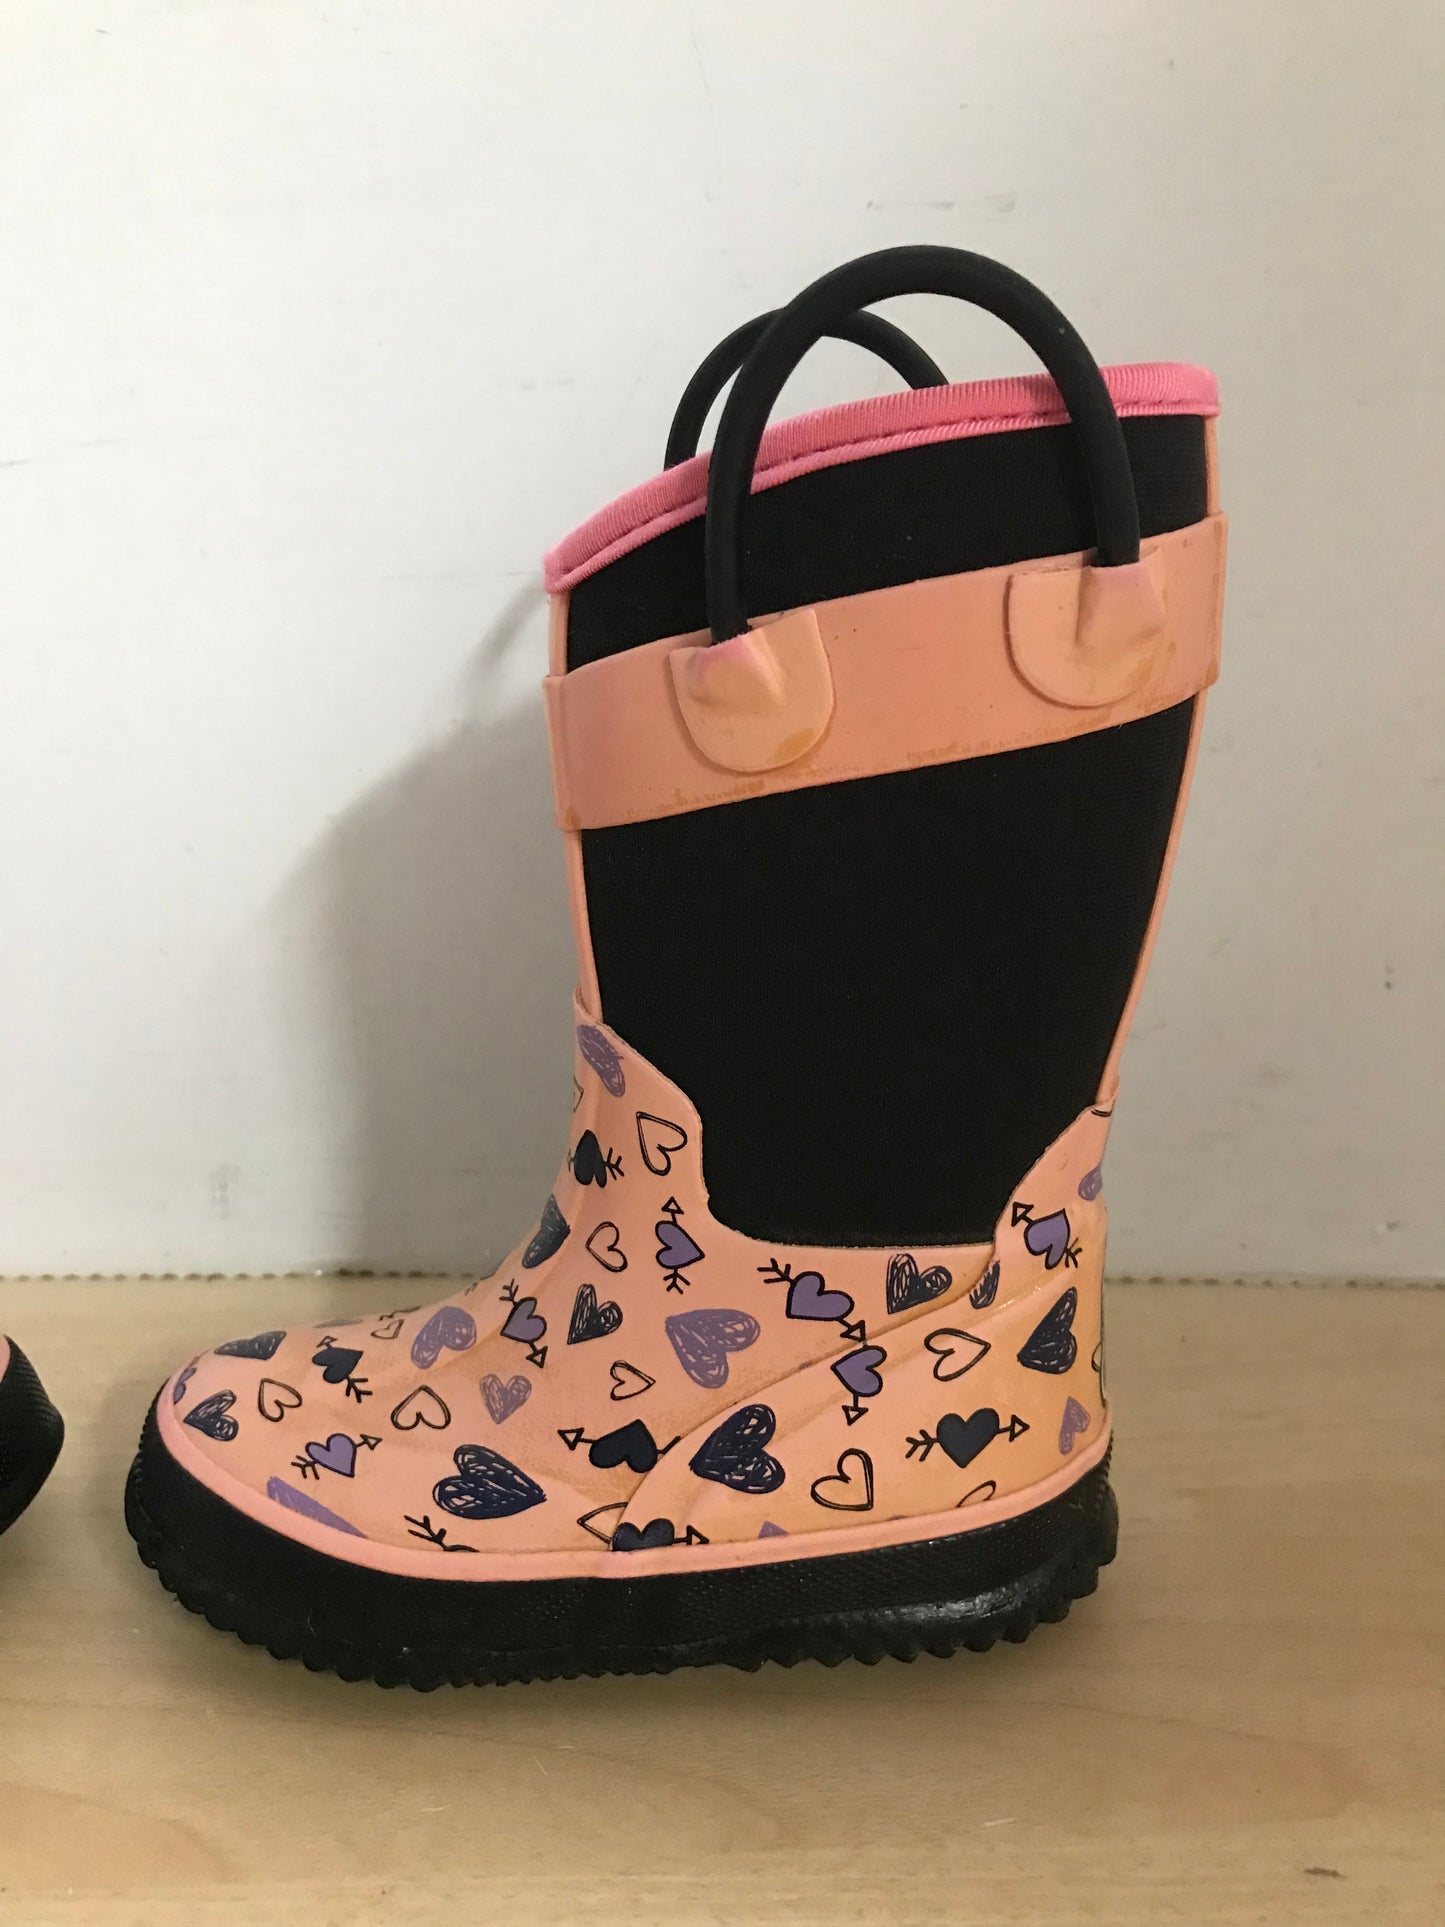 Bogs Style Infant Toddler Size 5 Neoprene Rubber Rain Winter Boots Pink Hearts Minor Wear